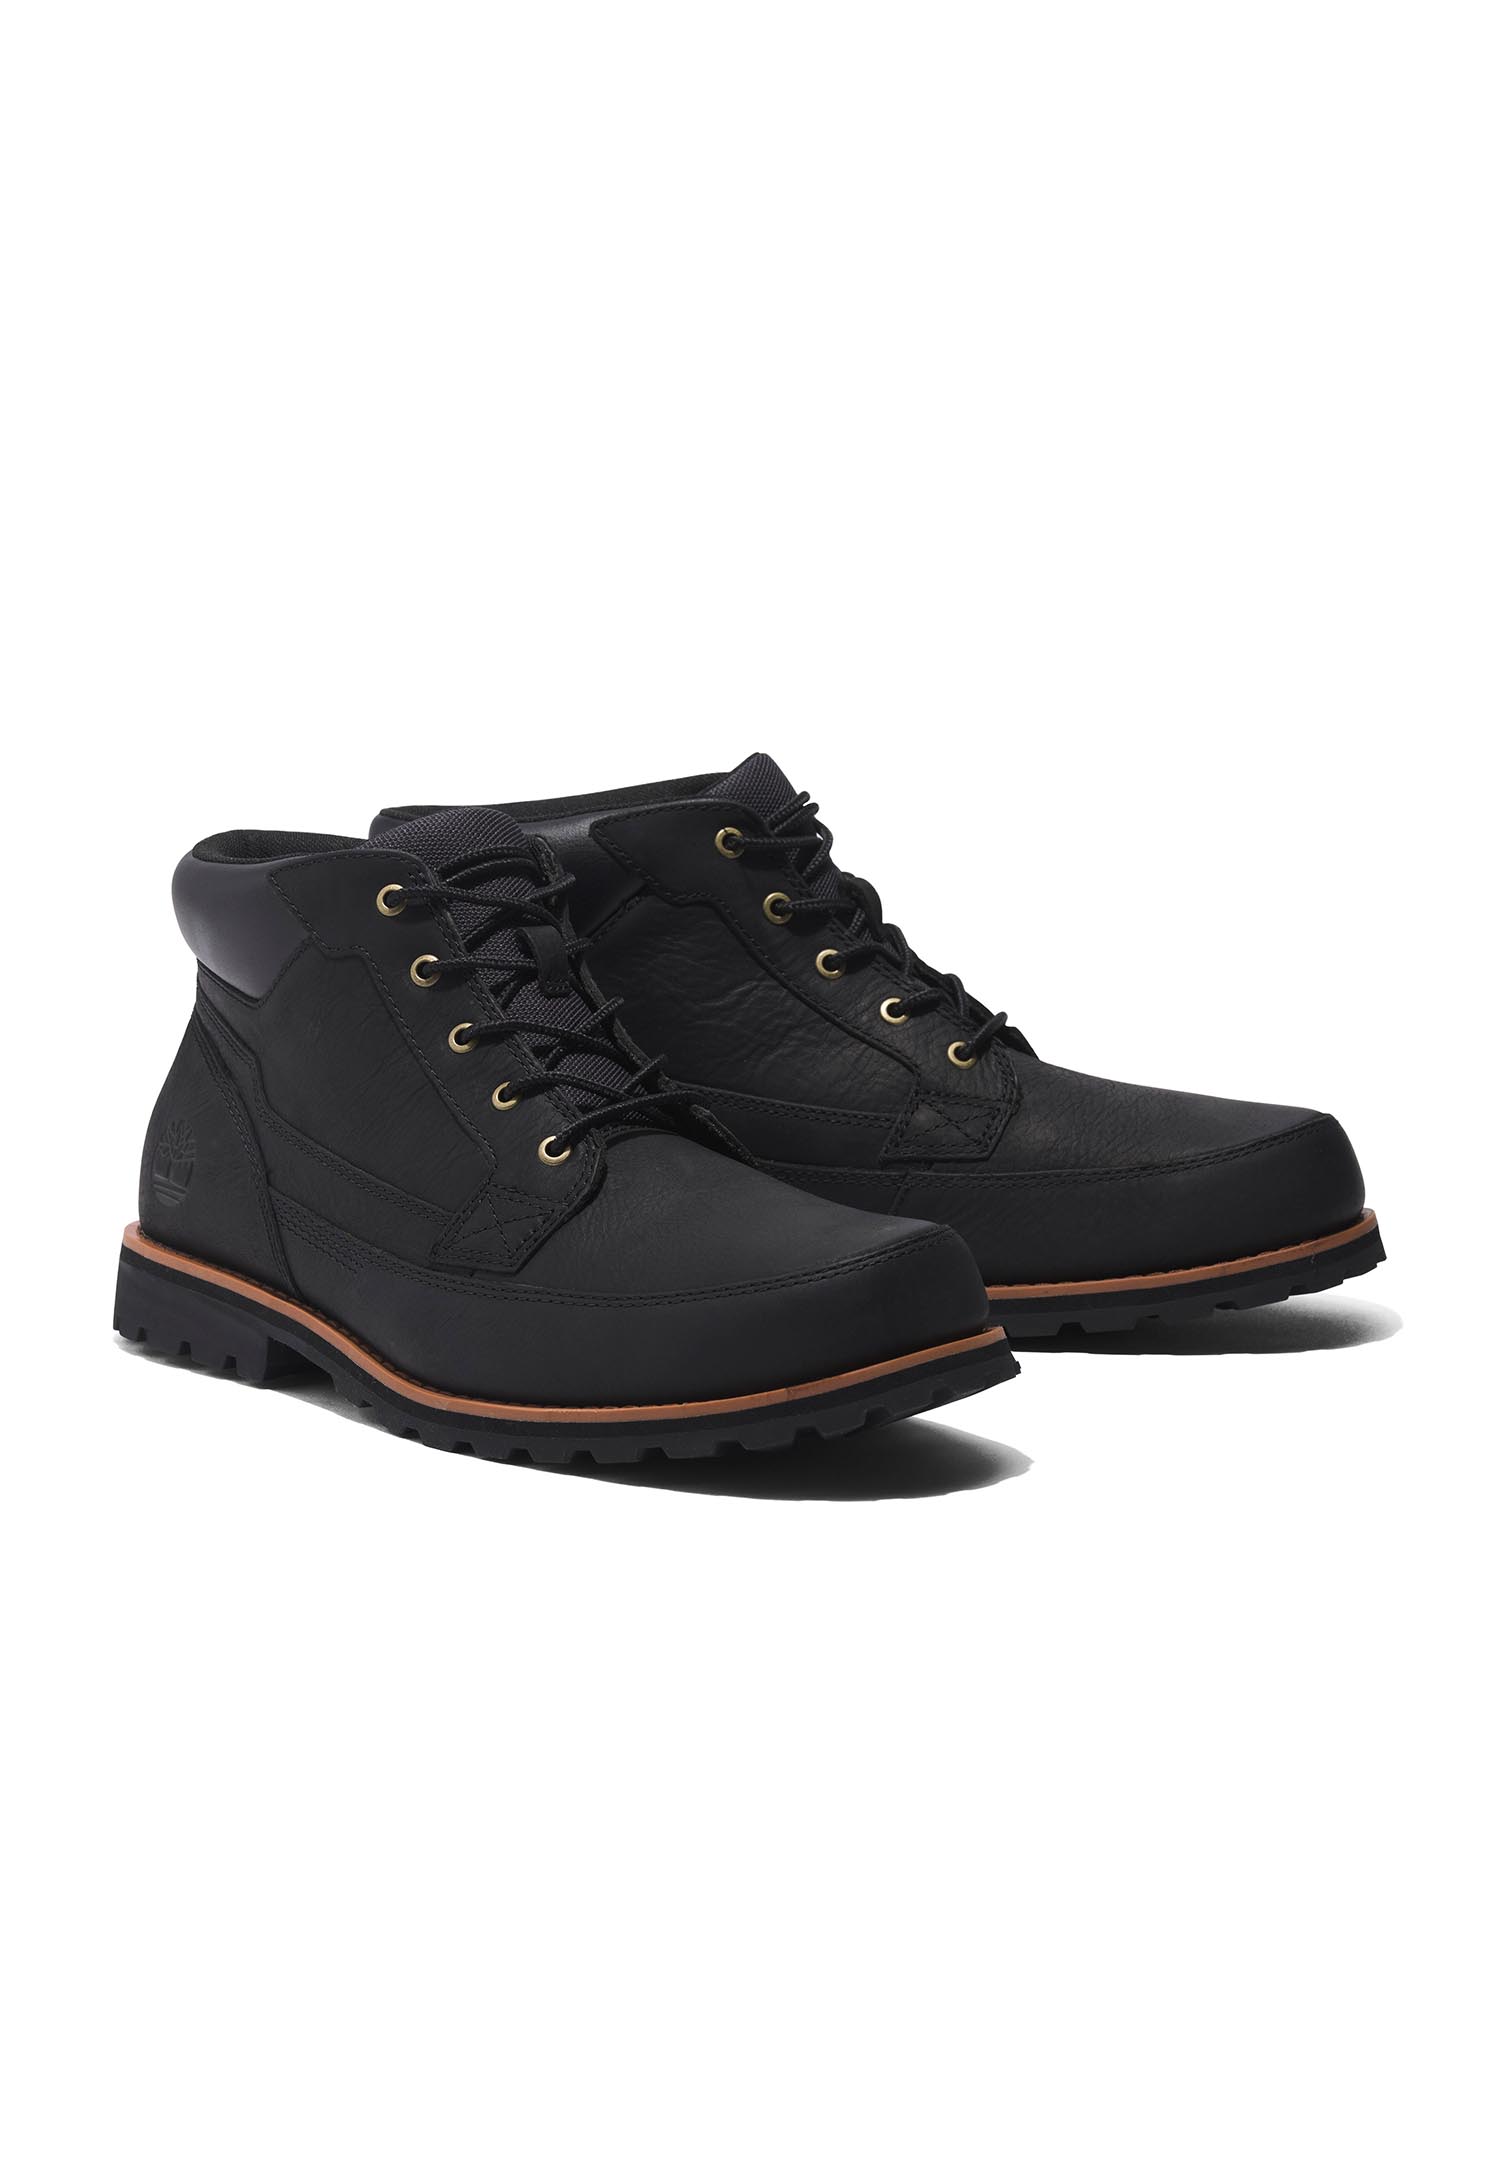 Timberland Attleboro 6 in Boots Herren Stiefelette Ankle Boots TB 0A6581 015 Schwarz